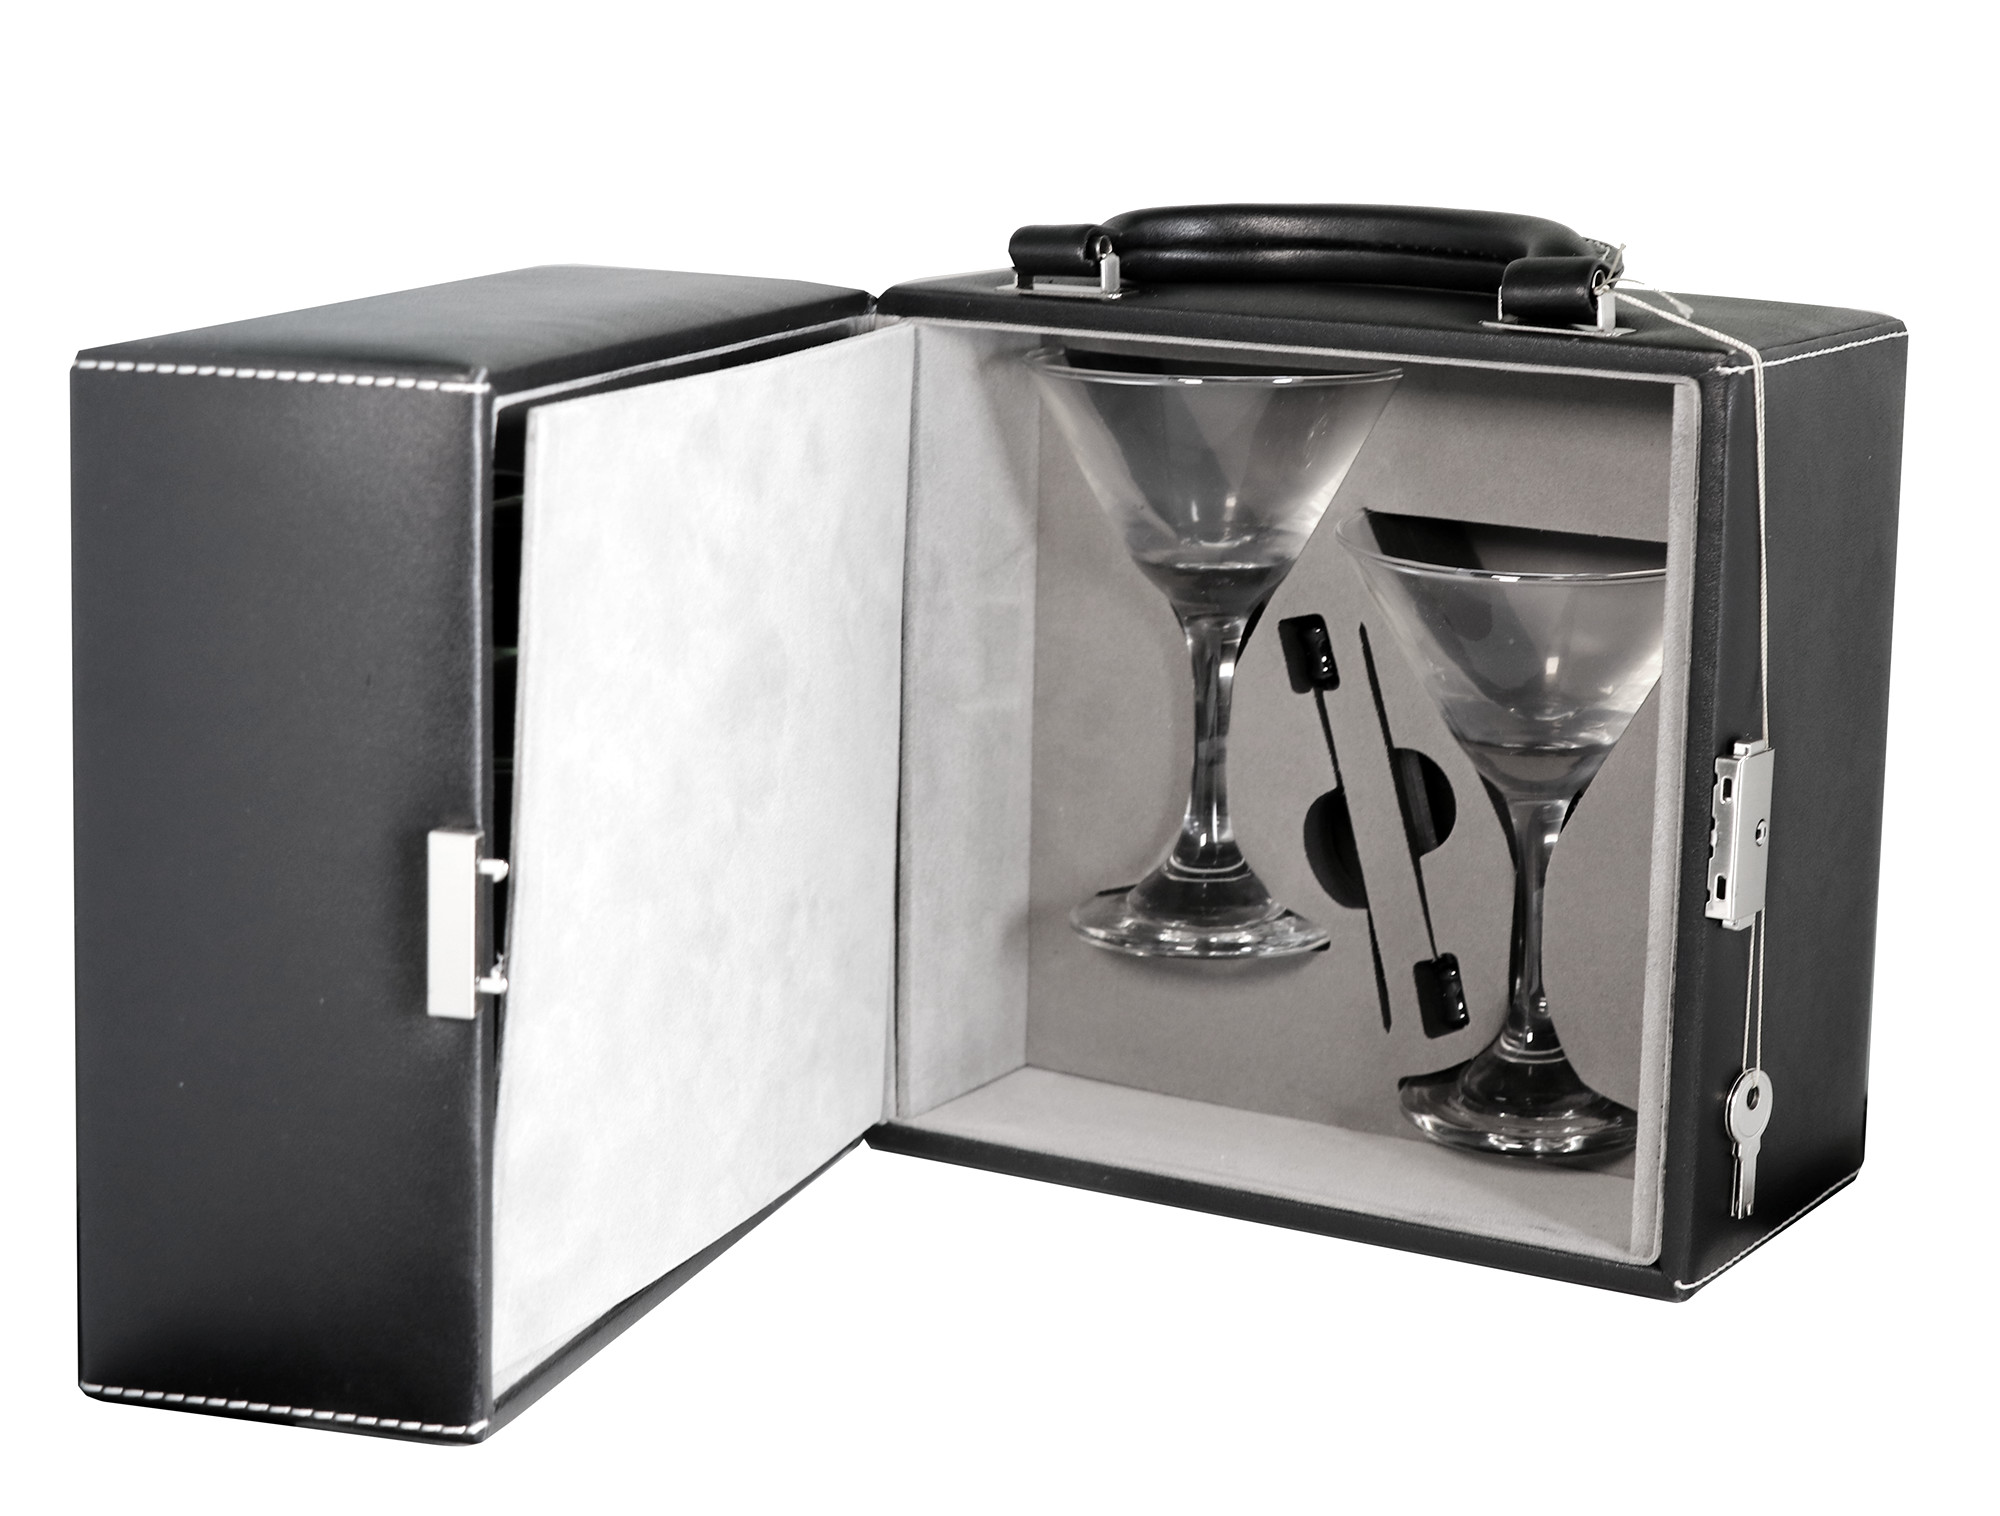 https://www.hansonellis.com/mm5/graphics/00000001/personalized-engraved-his-hers-martini-shaker-bar-glass-set5-fra-41w50_2.jpg